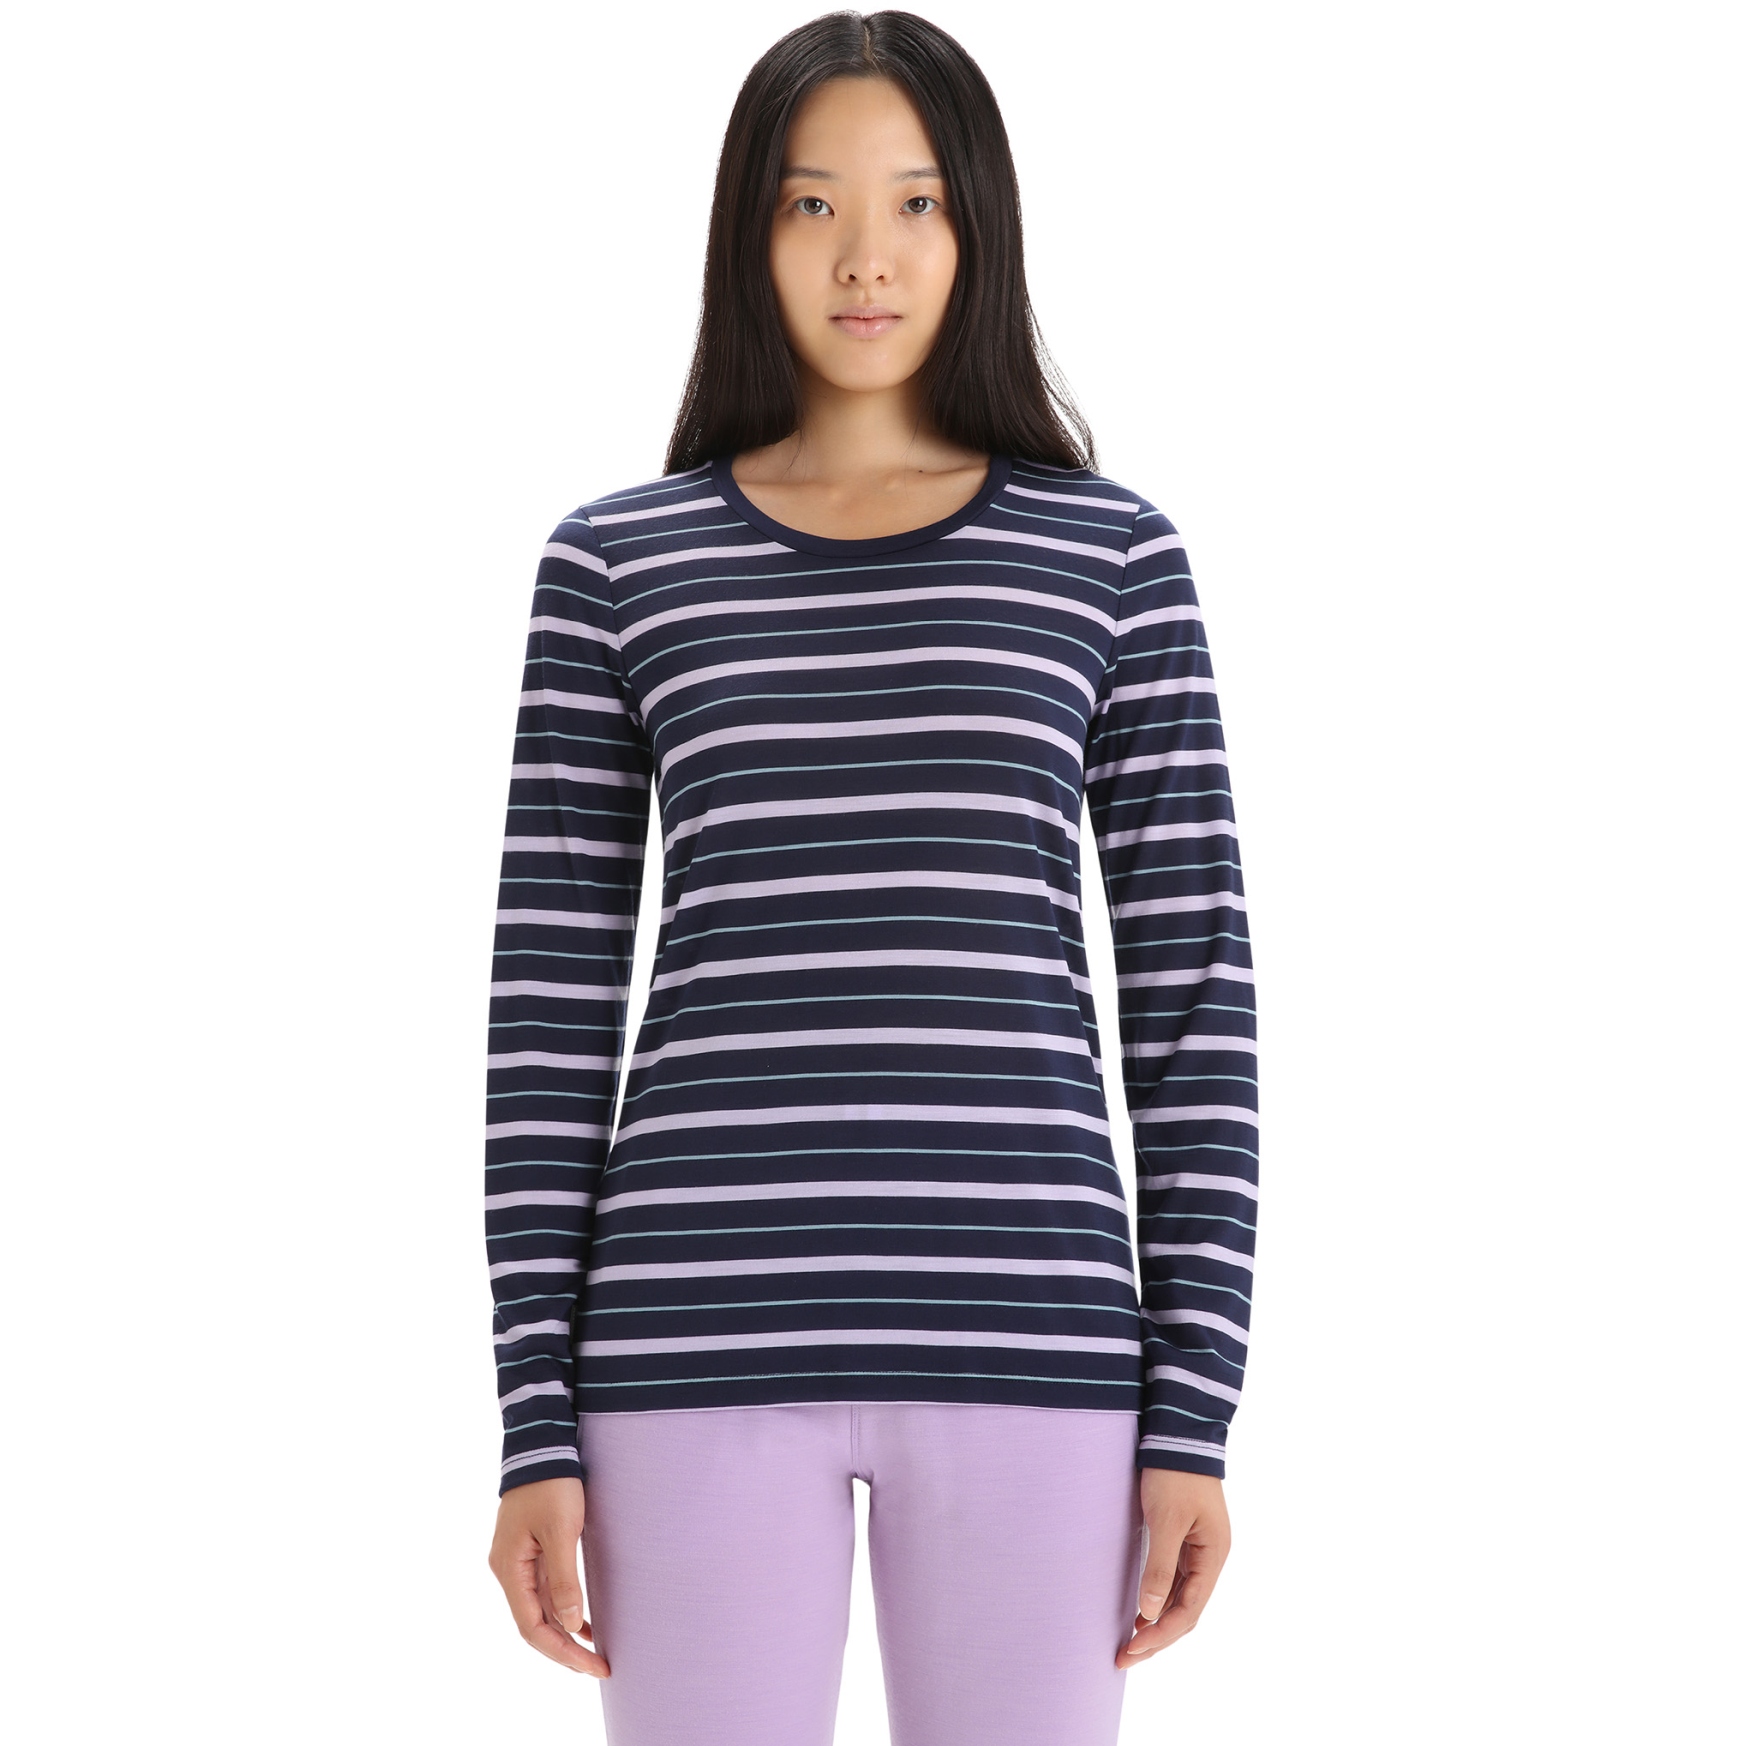 Image de Icebreaker T-Shirt Manches Longues Femme - Wave - Midnight Navy/Purple Gaze/Stripe